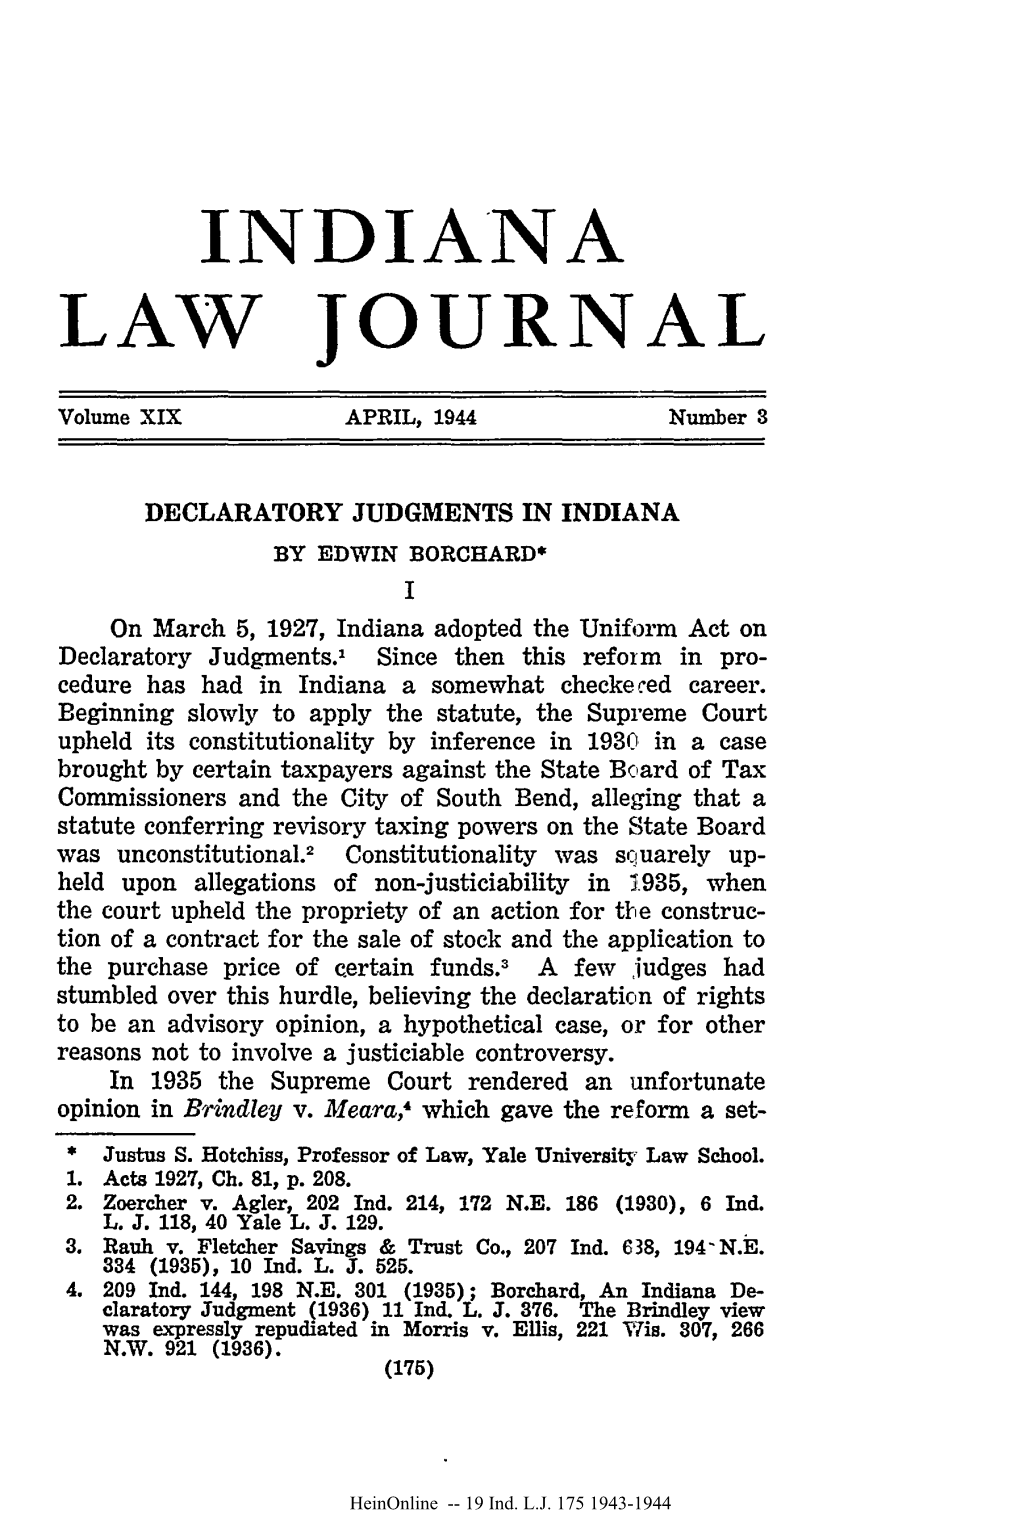 Declaratory Judgments in Indiana